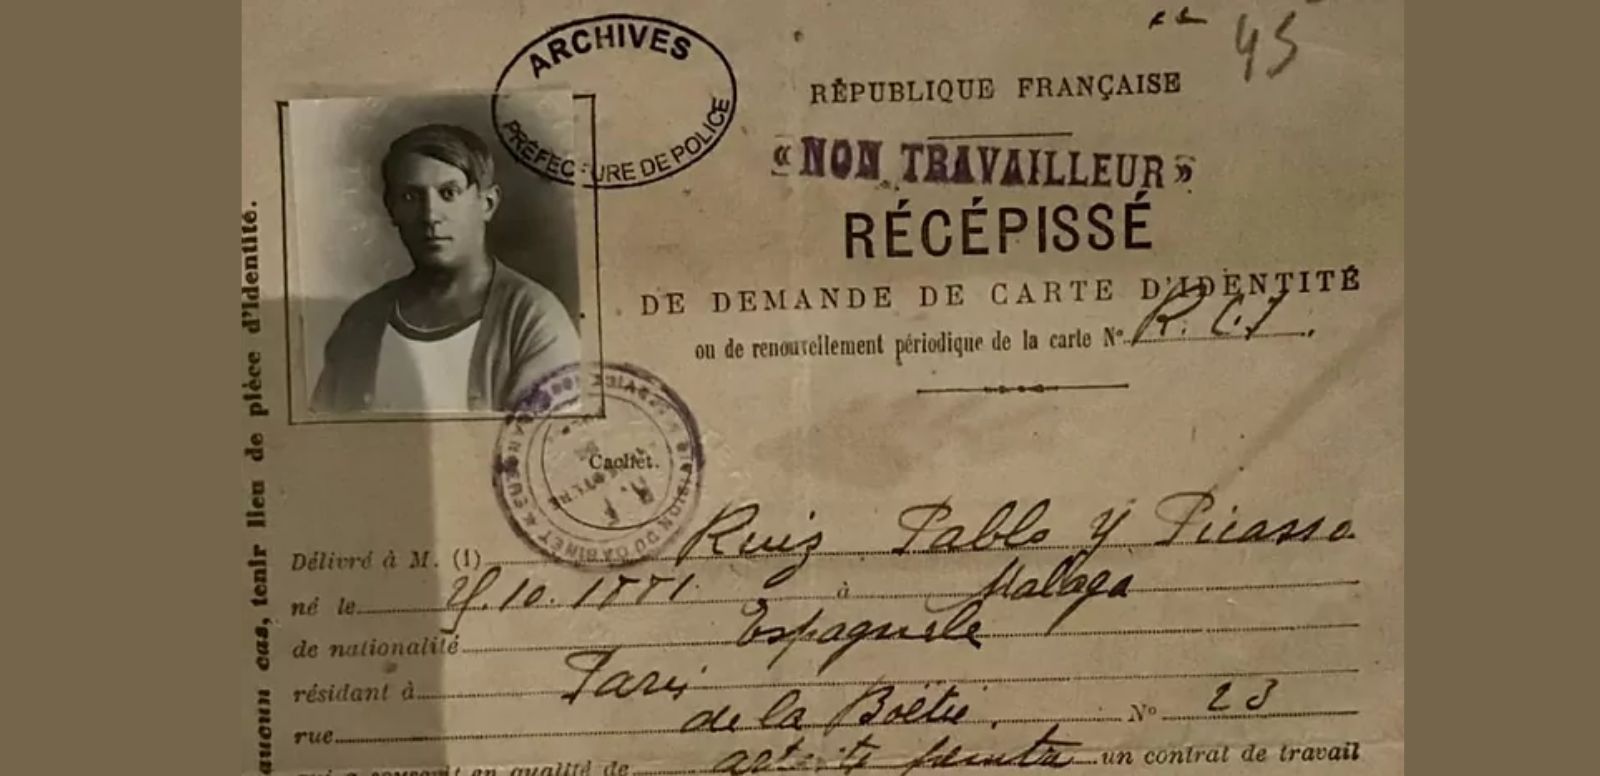 Petición de carnet de identidad francés.I.G.